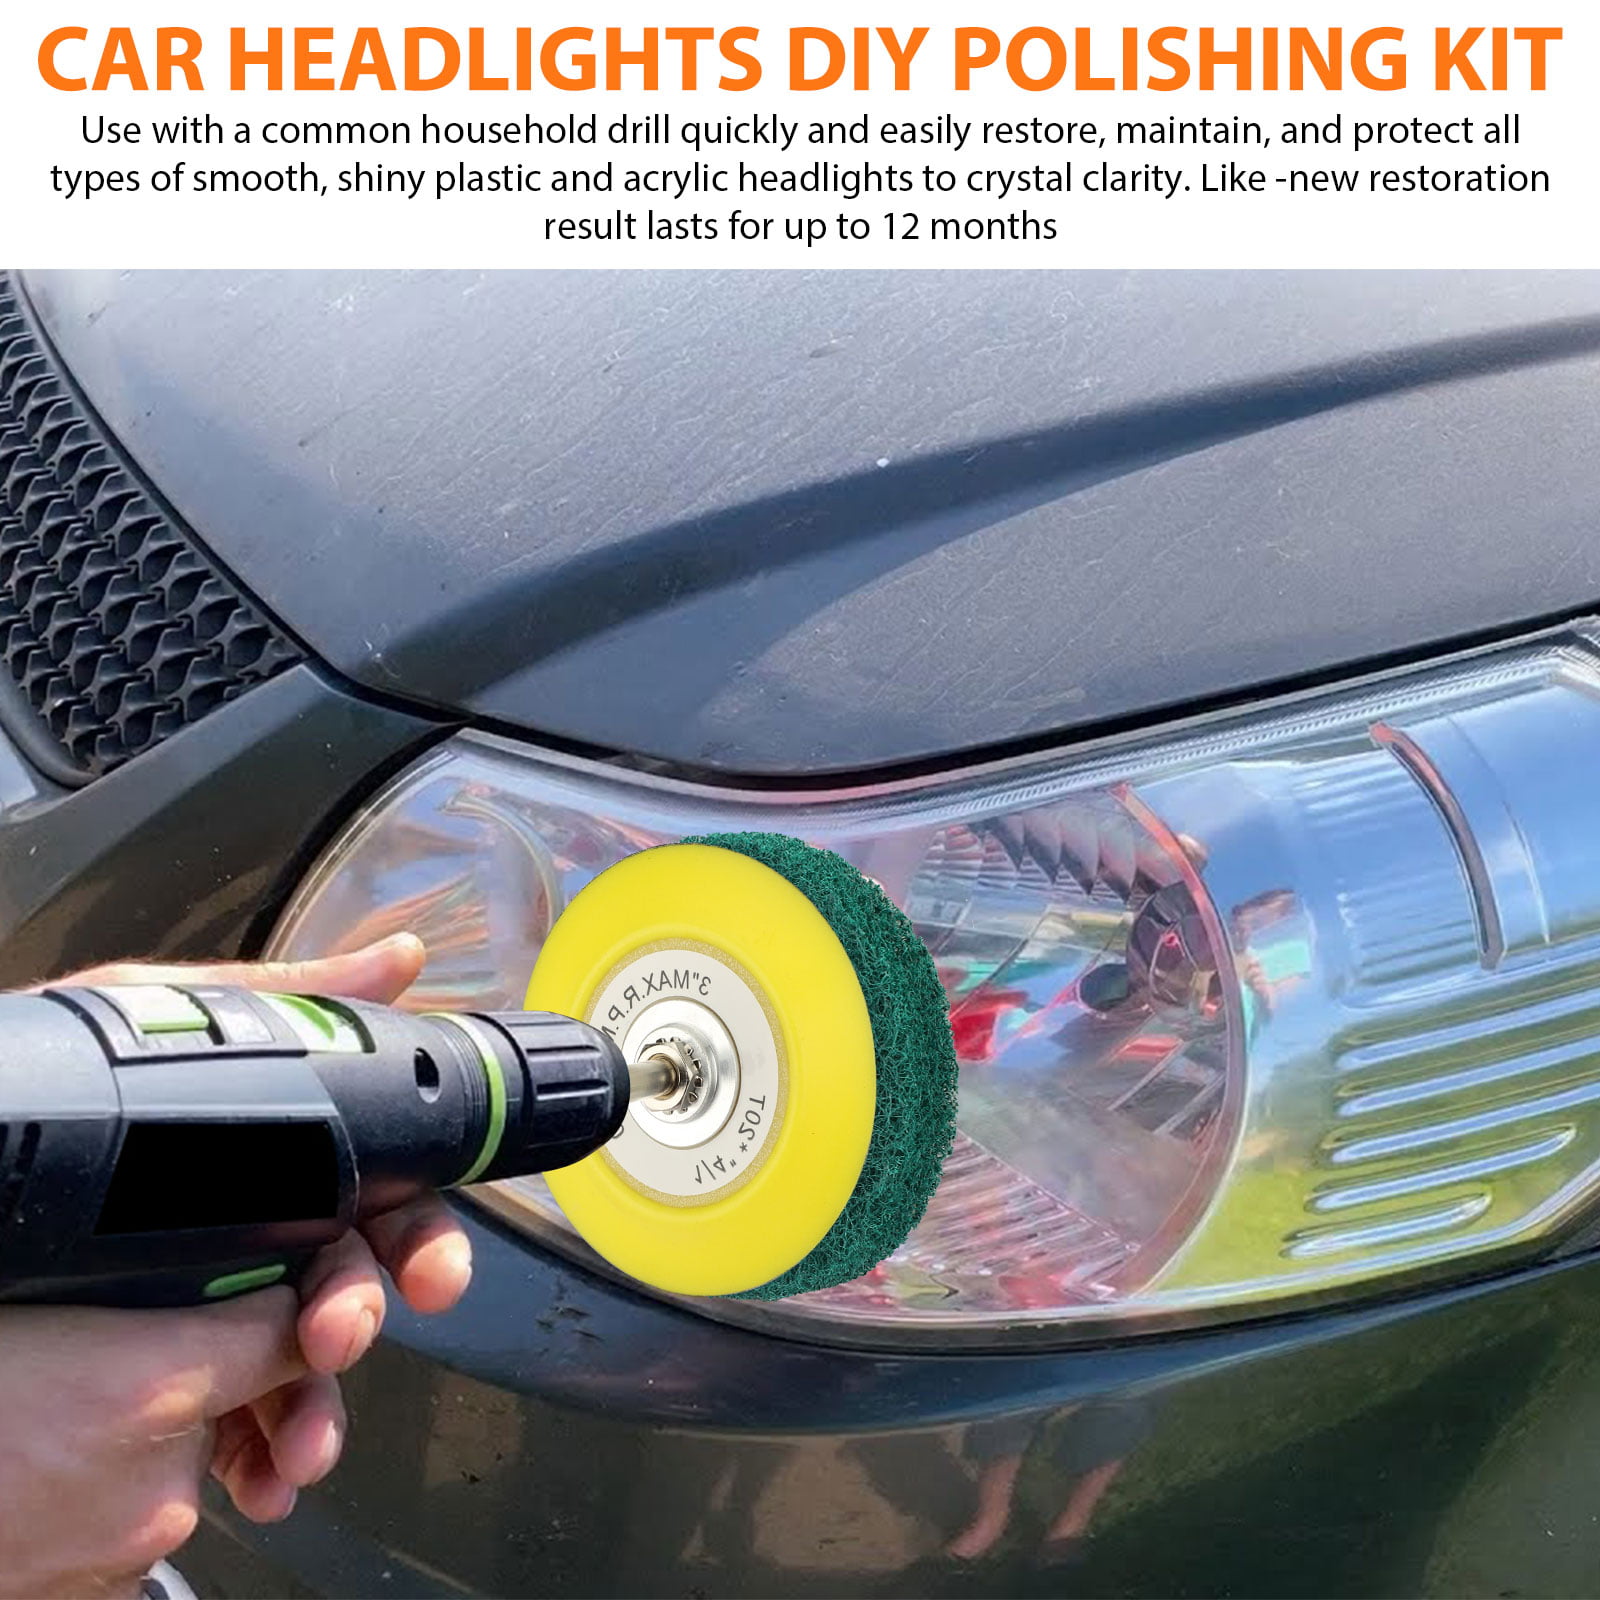 Headlights polishing kit BOSSAUTO